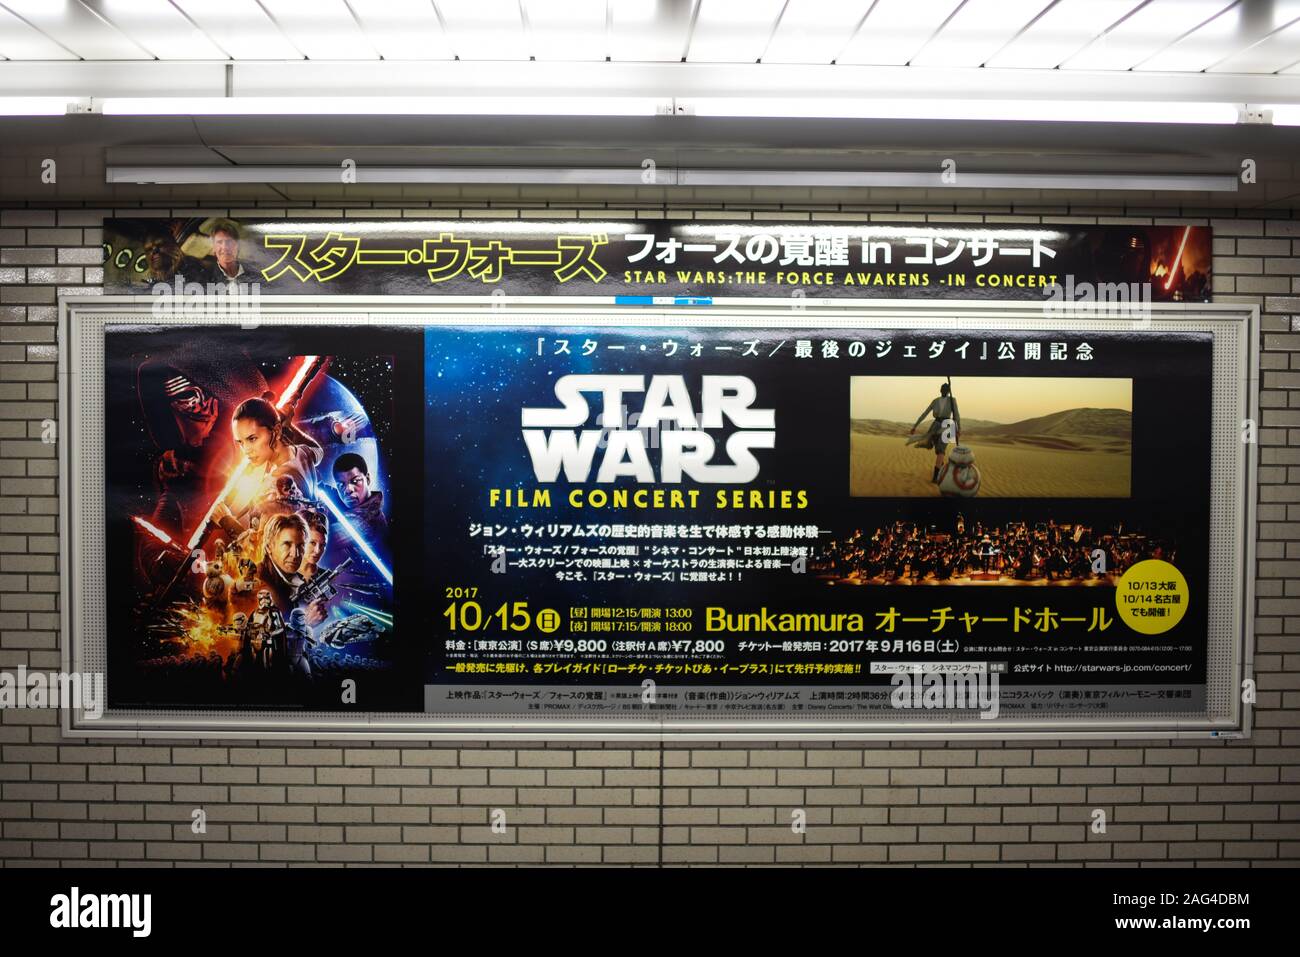 Star Wars Film Konzert Serie Plakat in der U-Bahn, Tokio, Japan Stockfoto